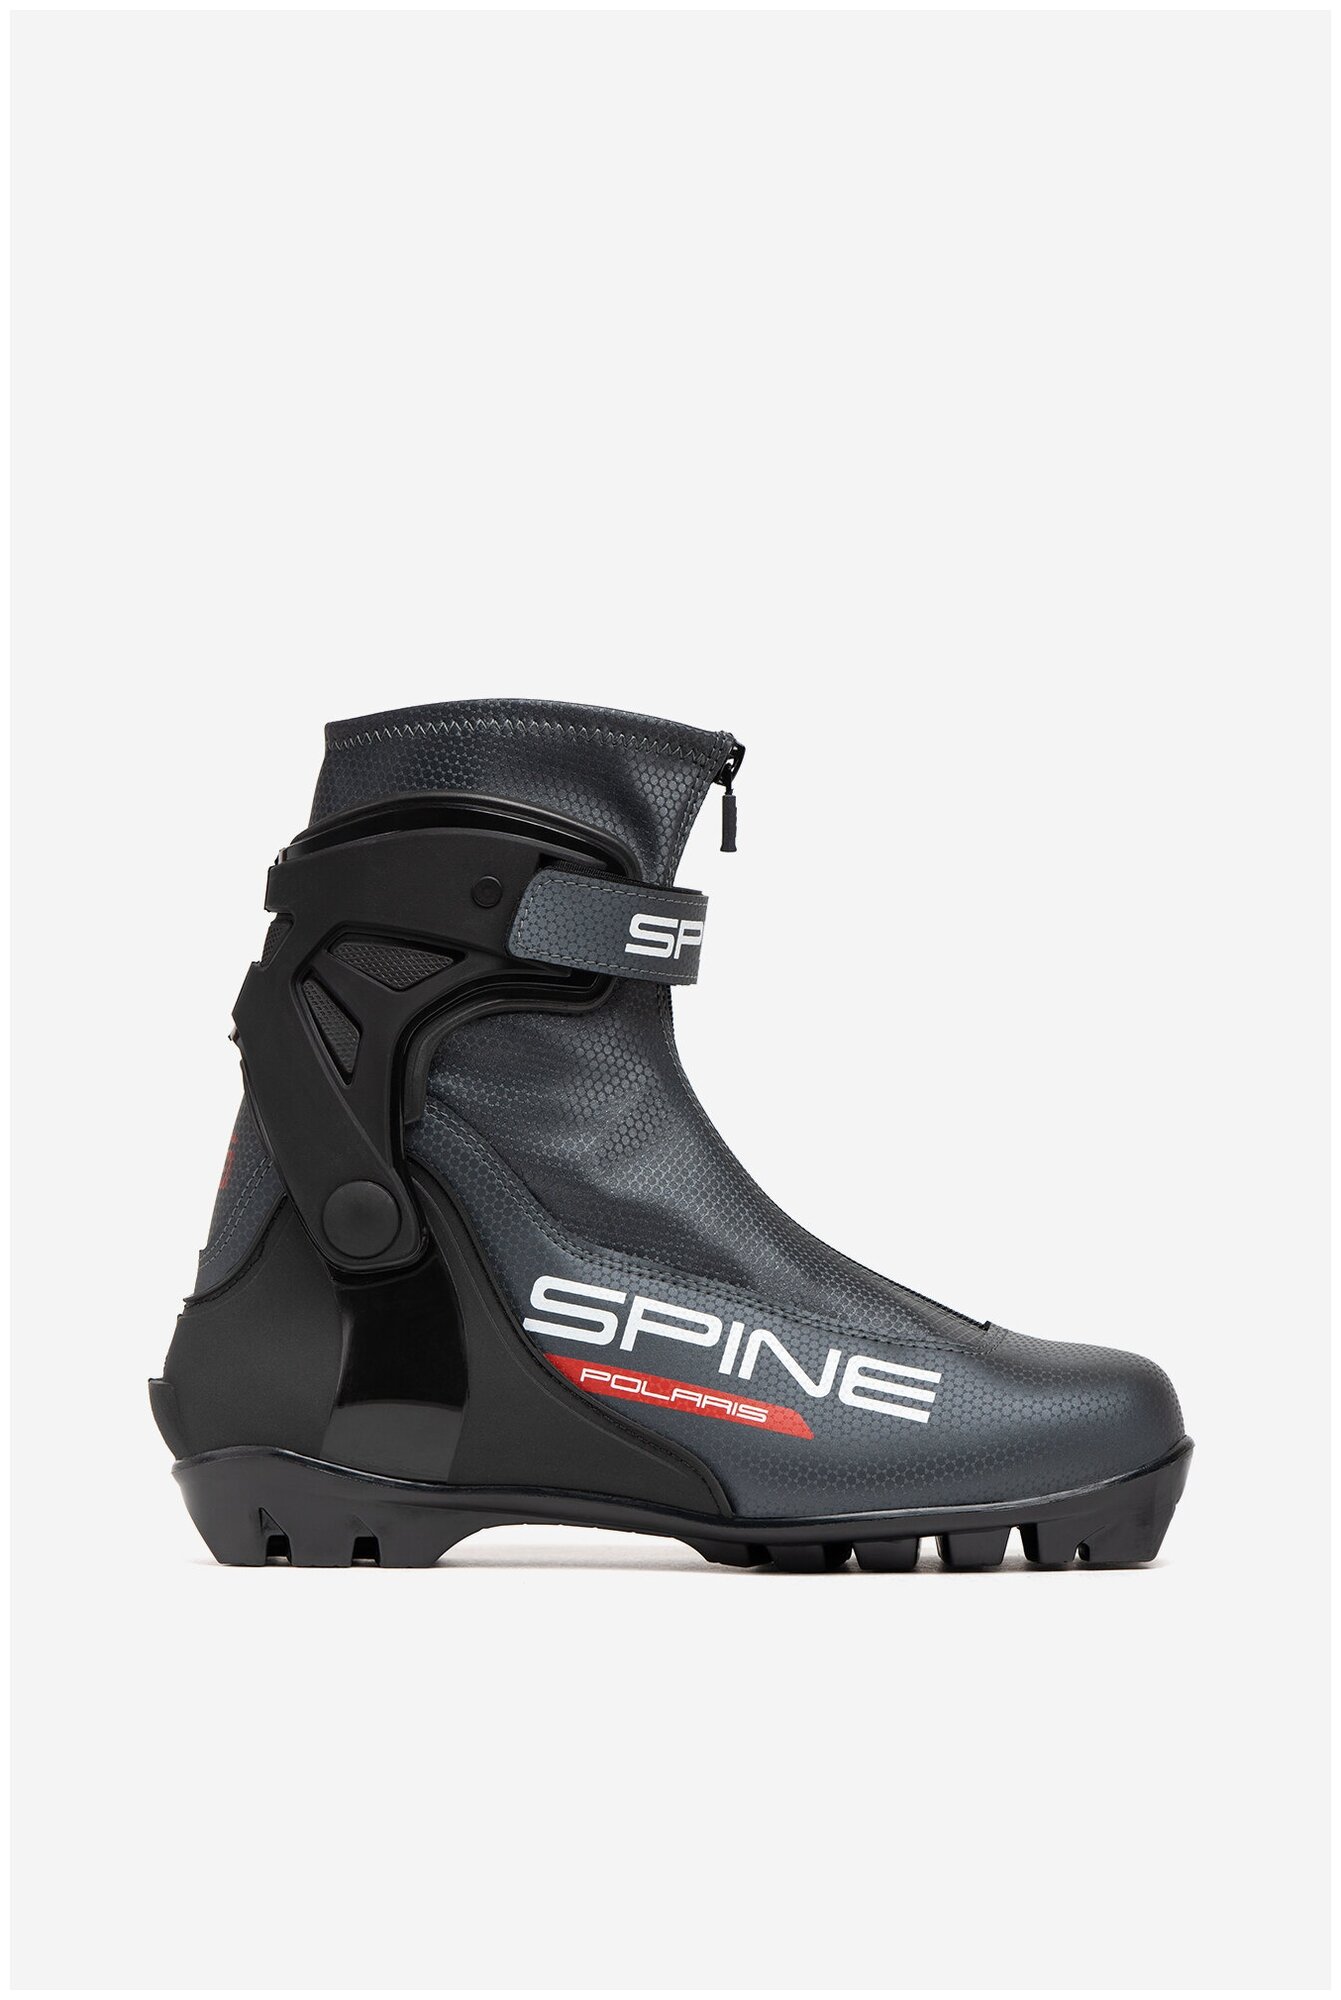 Лыжные ботинки Spine Polaris 85-22 NNN (р.44)